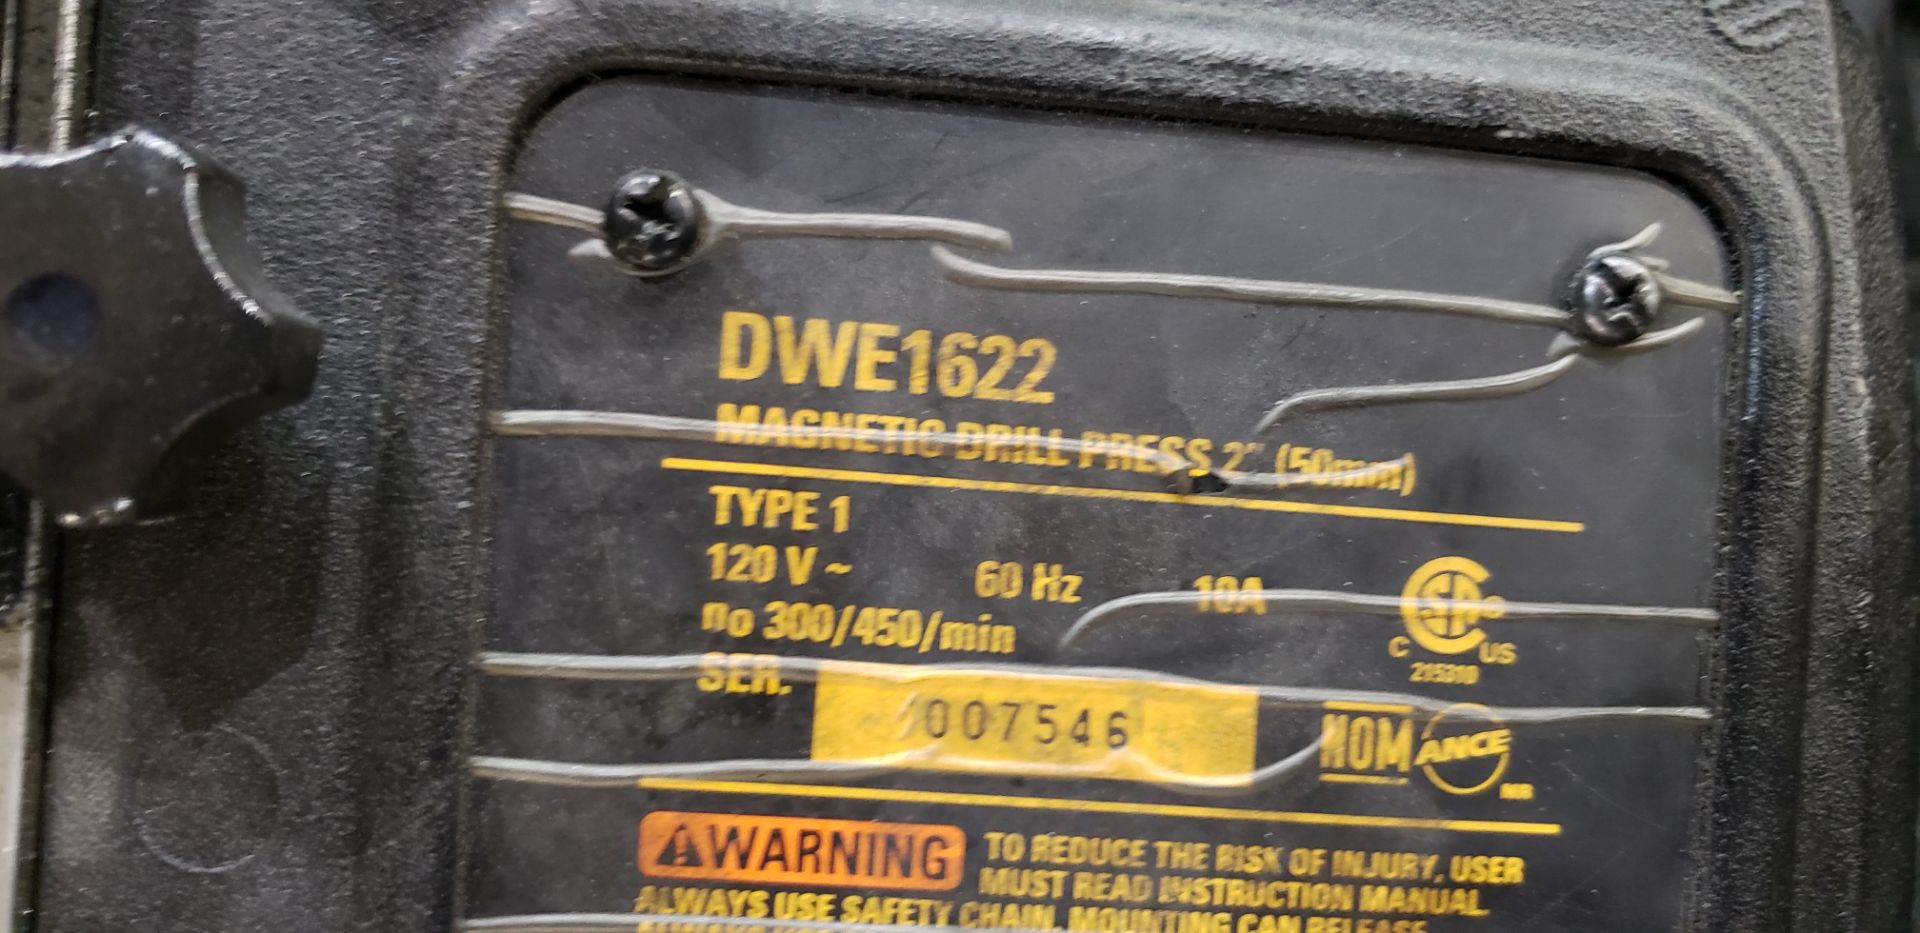 Dewalt DWE1622 2" Magnetic Drill Press - Image 3 of 3